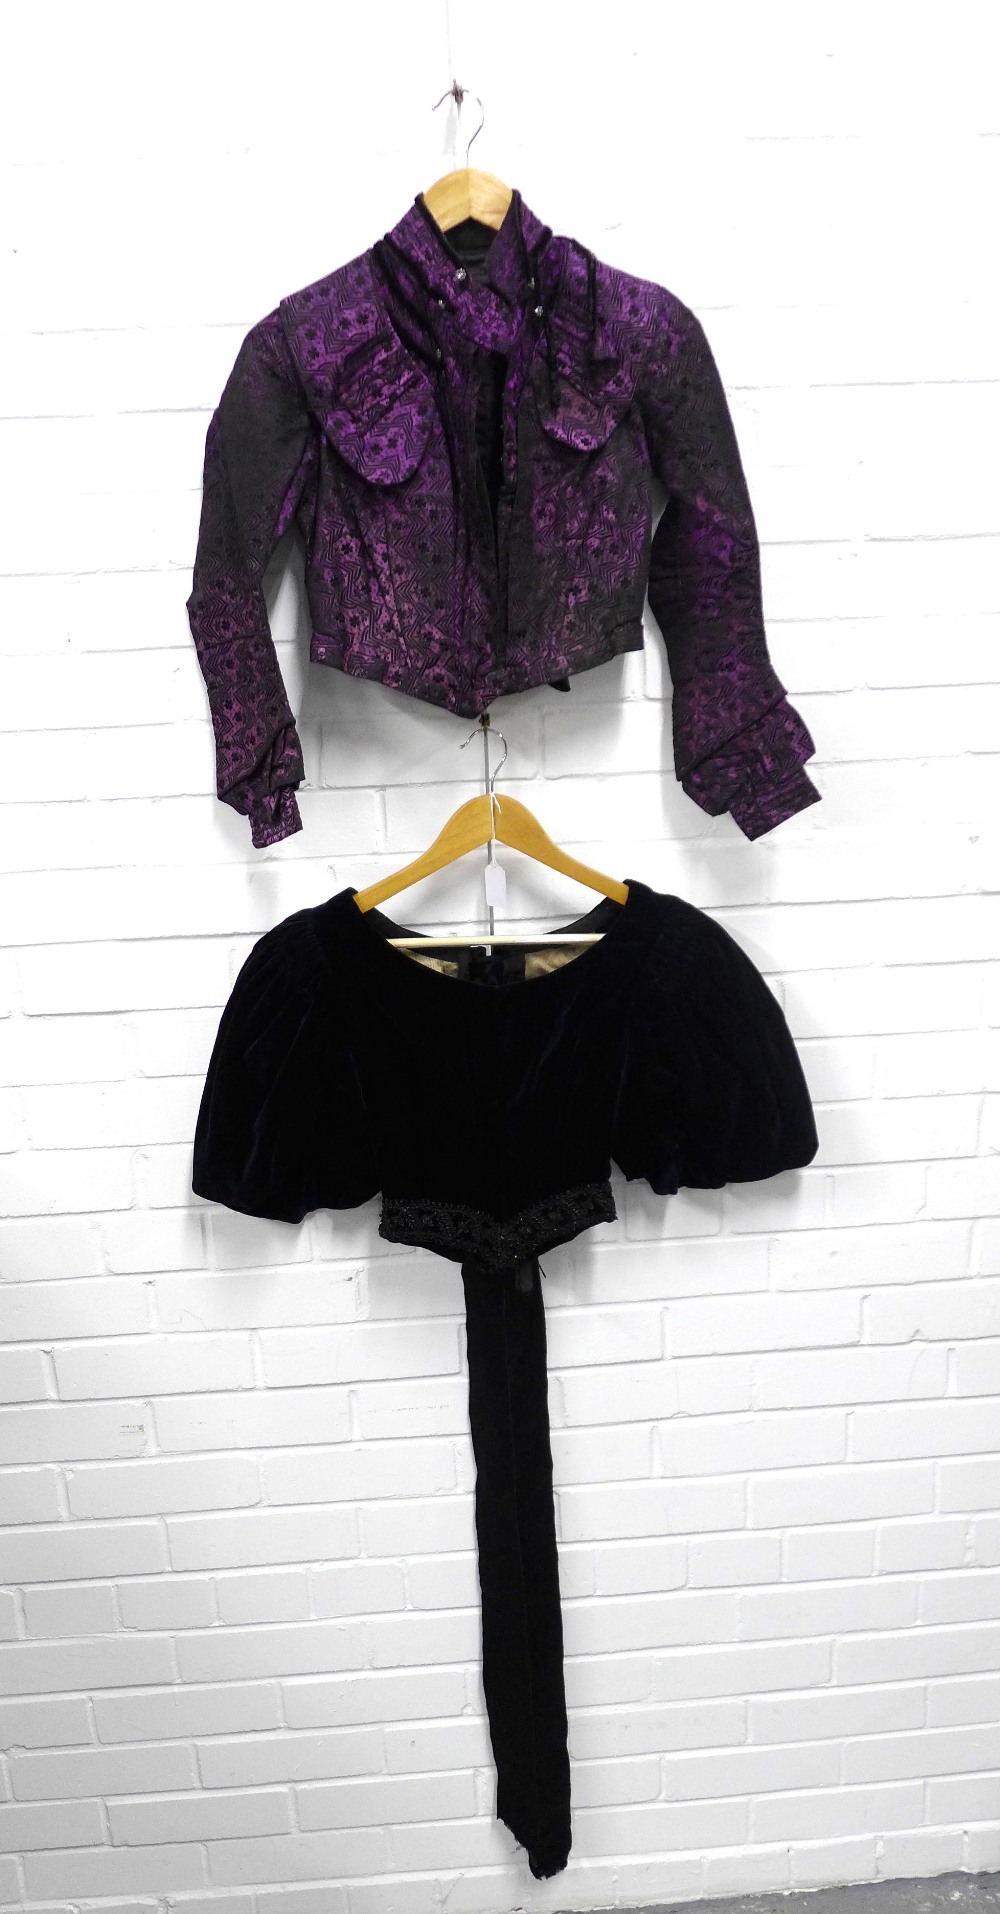 Copland & Lye of Glasgow bodice jacket, purple with black stitched pattern, boned lining together